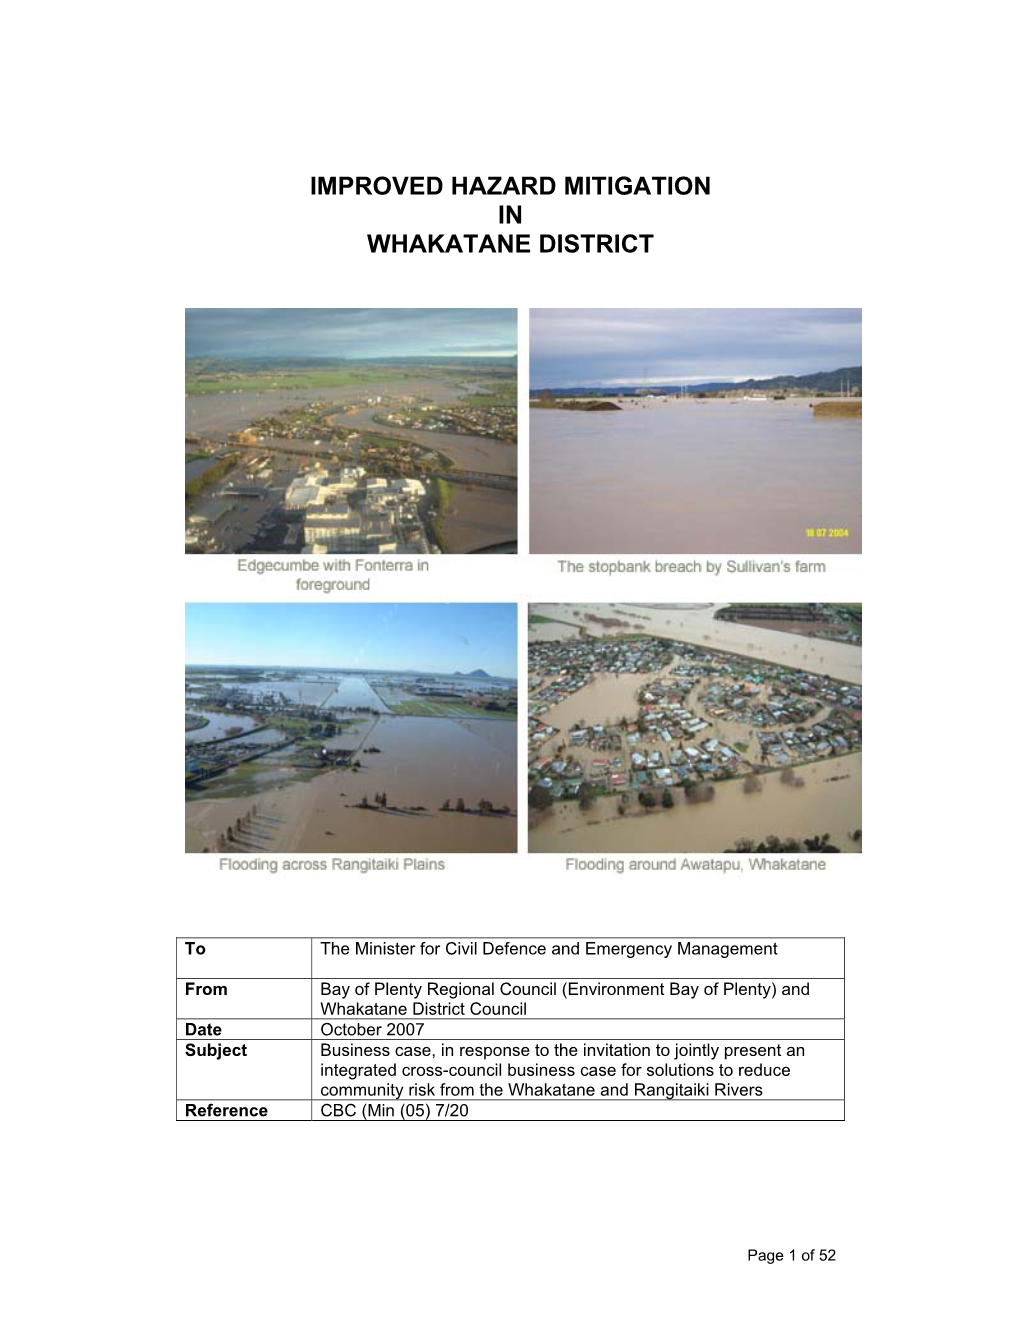 Improved Hazard Mitigation in Whakatane District